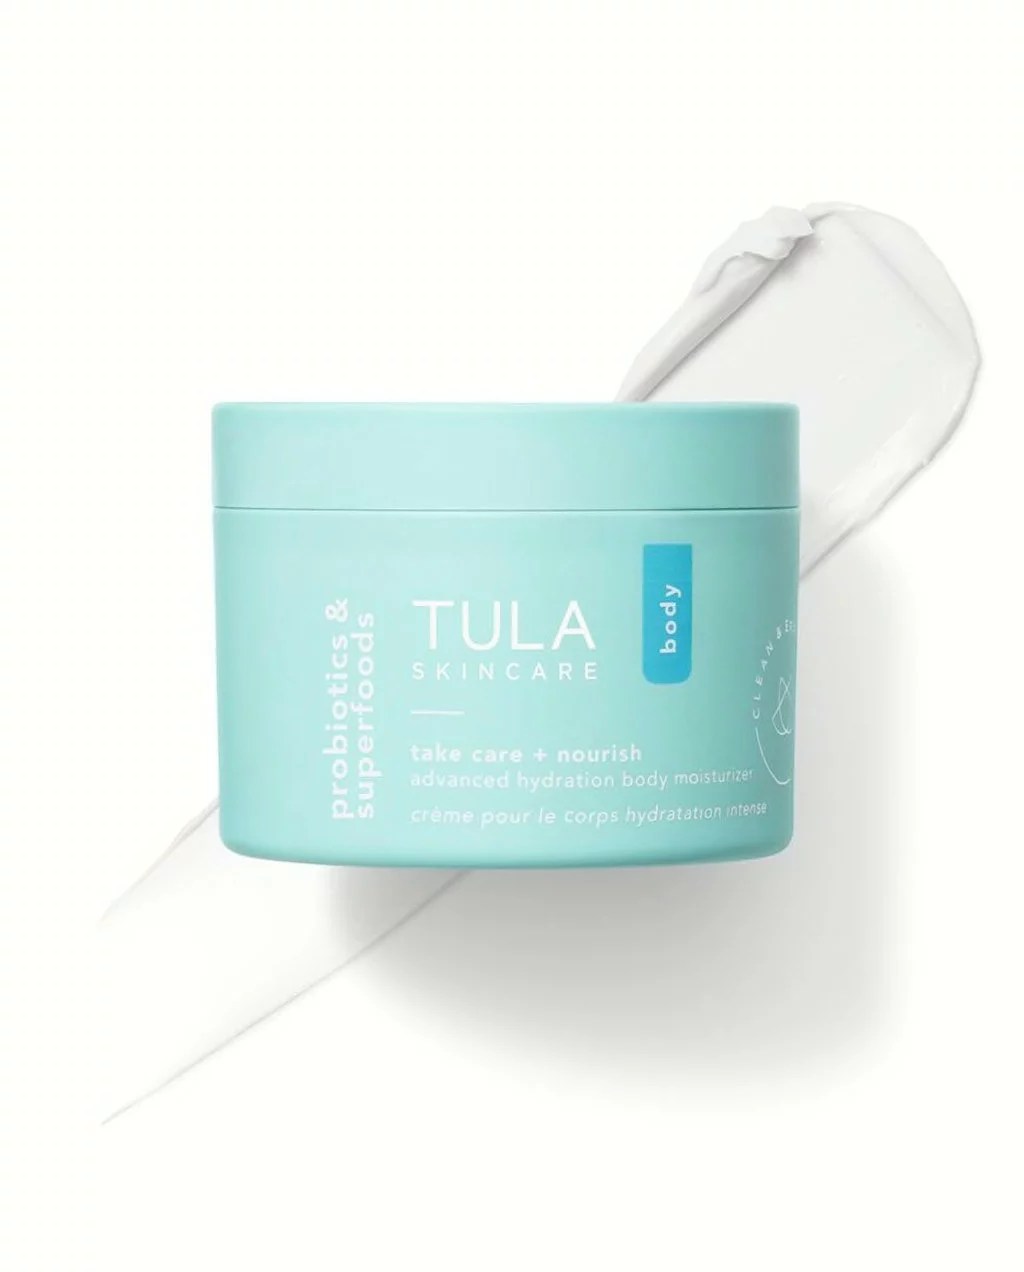 Tula take care + nourish body moisturizer